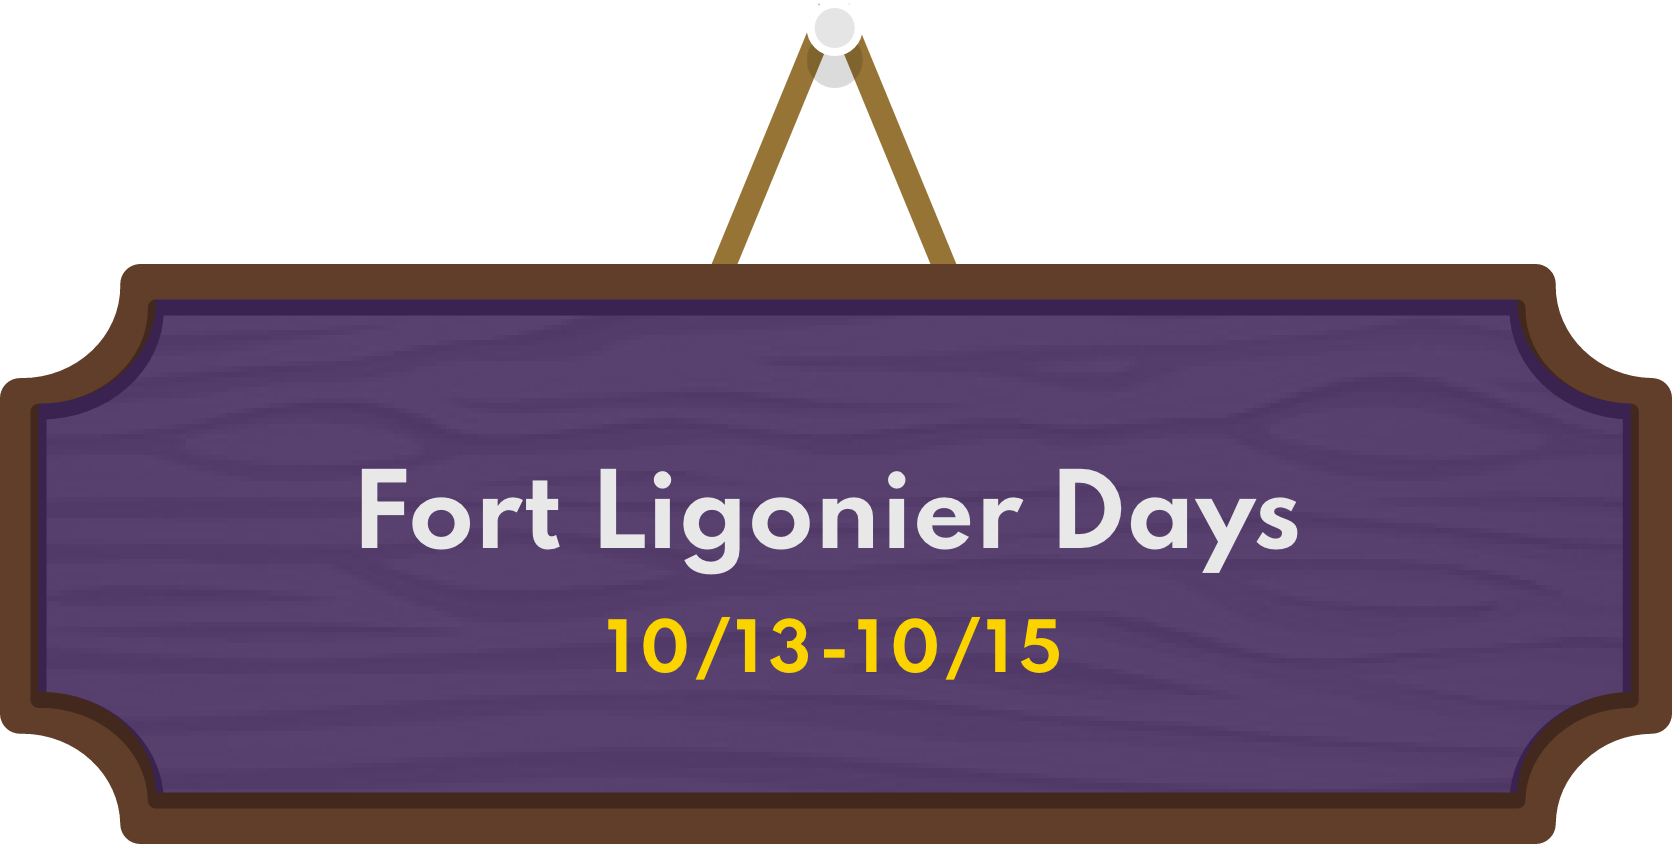 Fort Ligonier Days 10/13-10/15